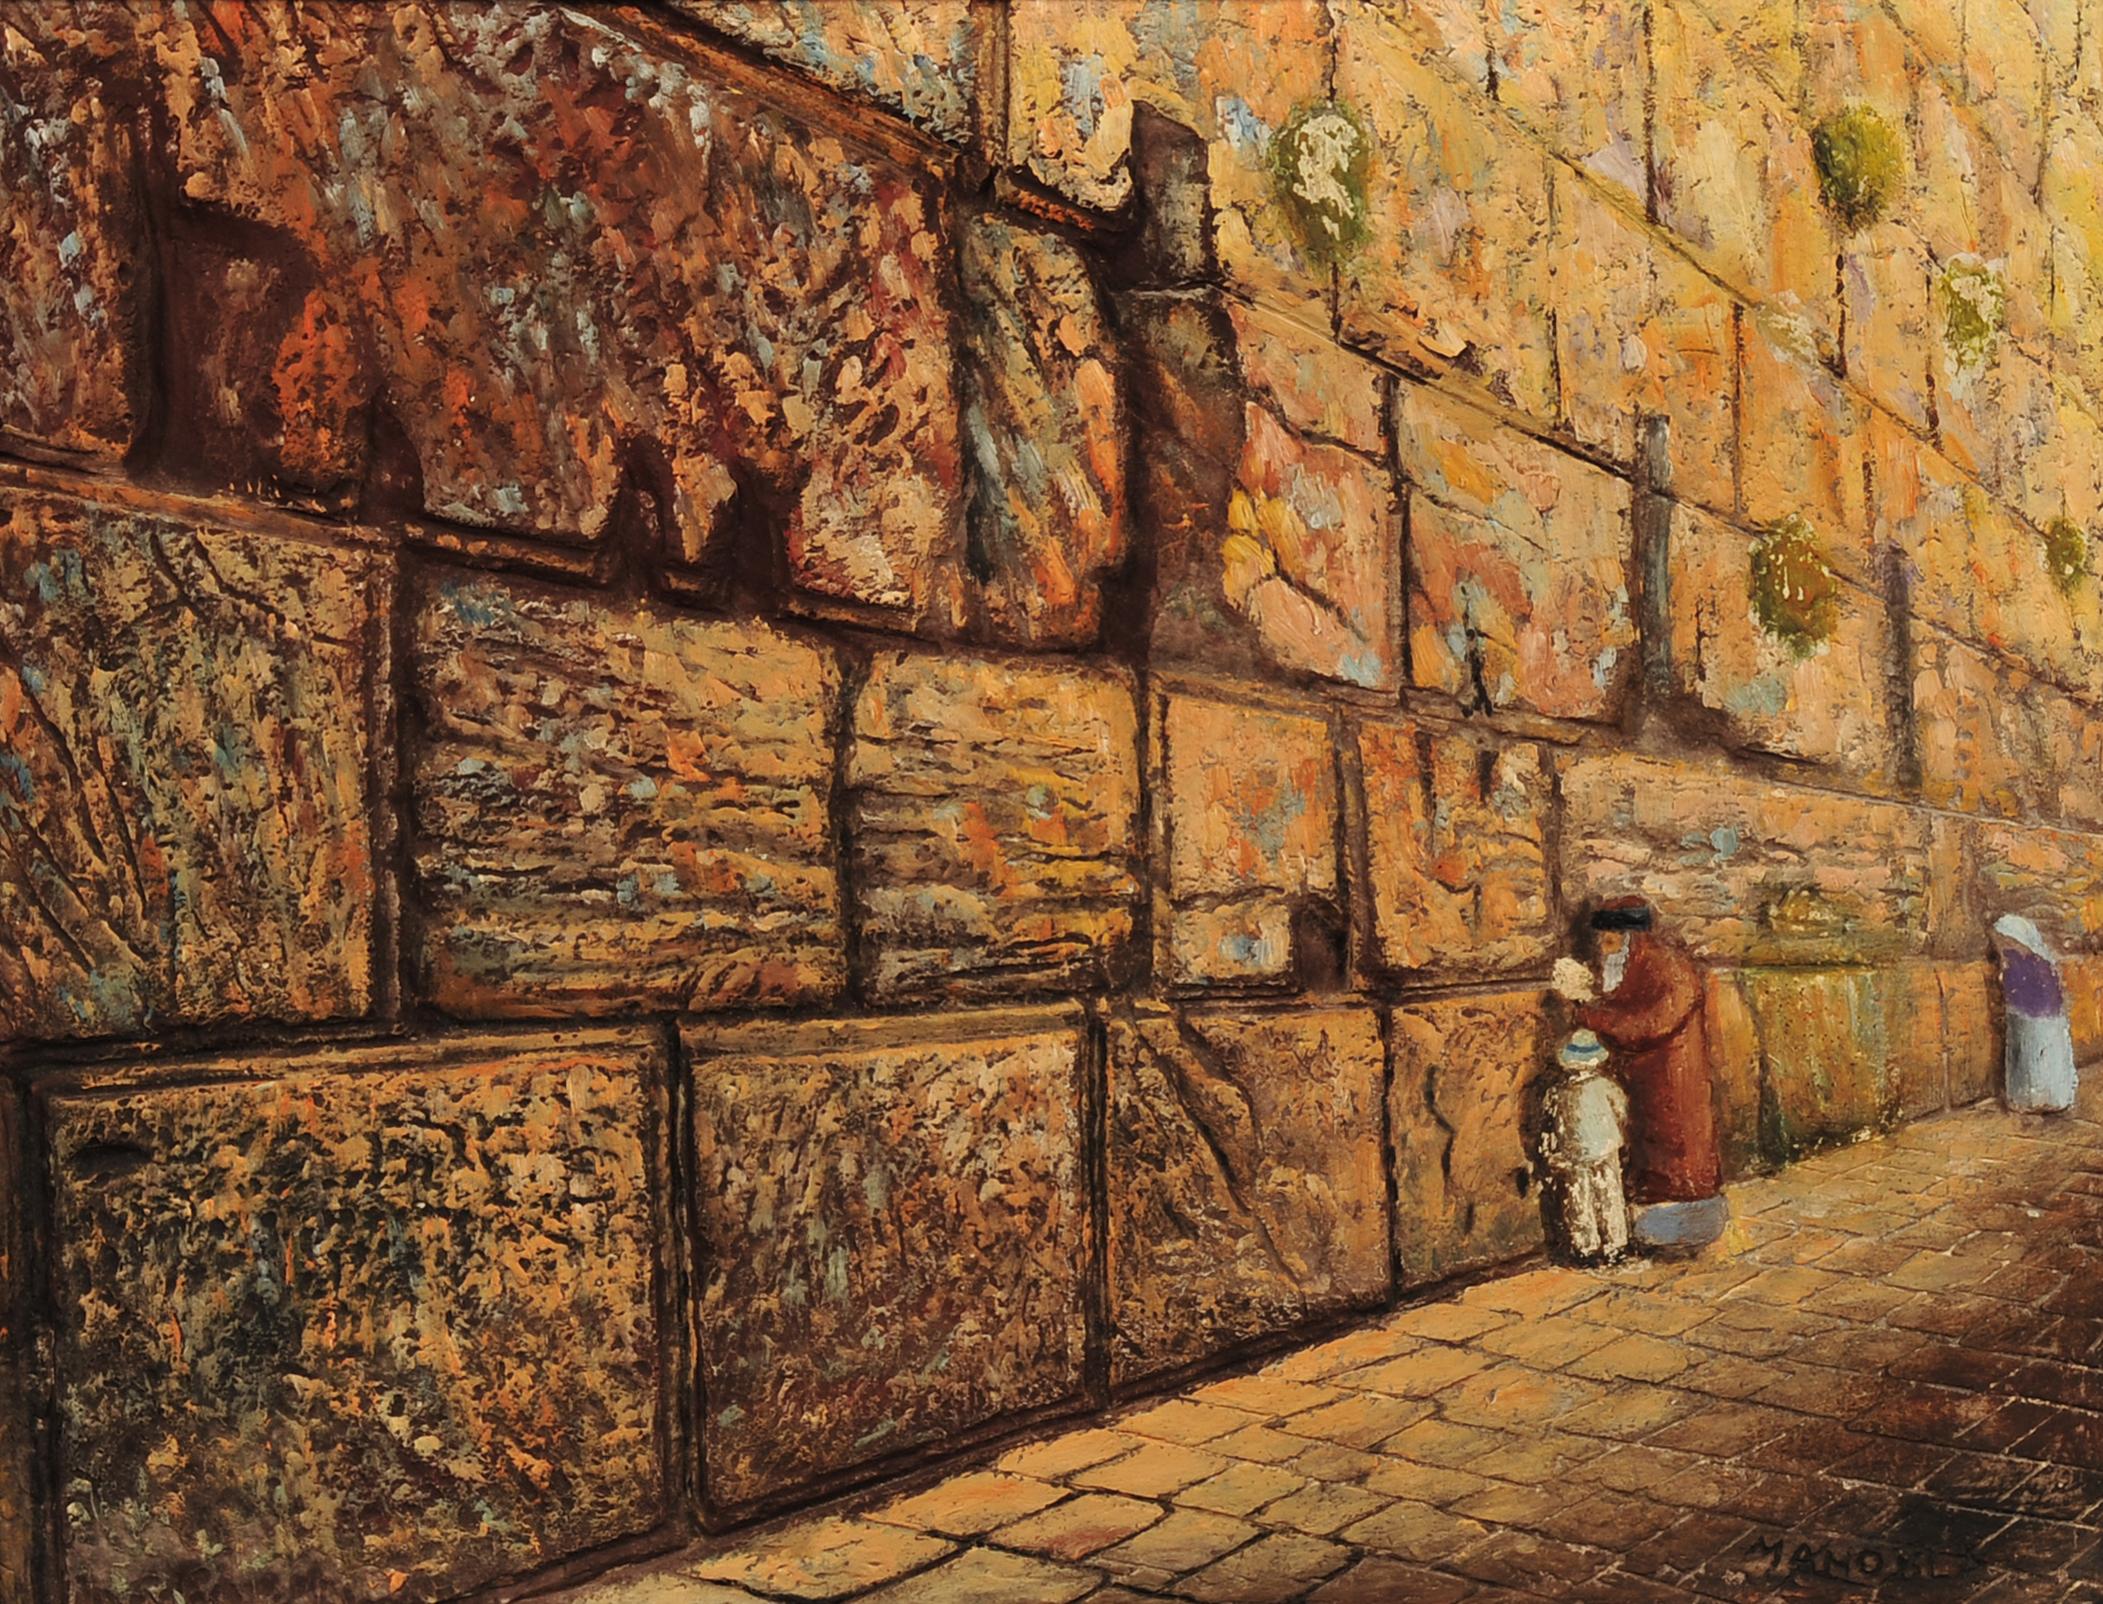 Wailing Wall - Painting by Manobla